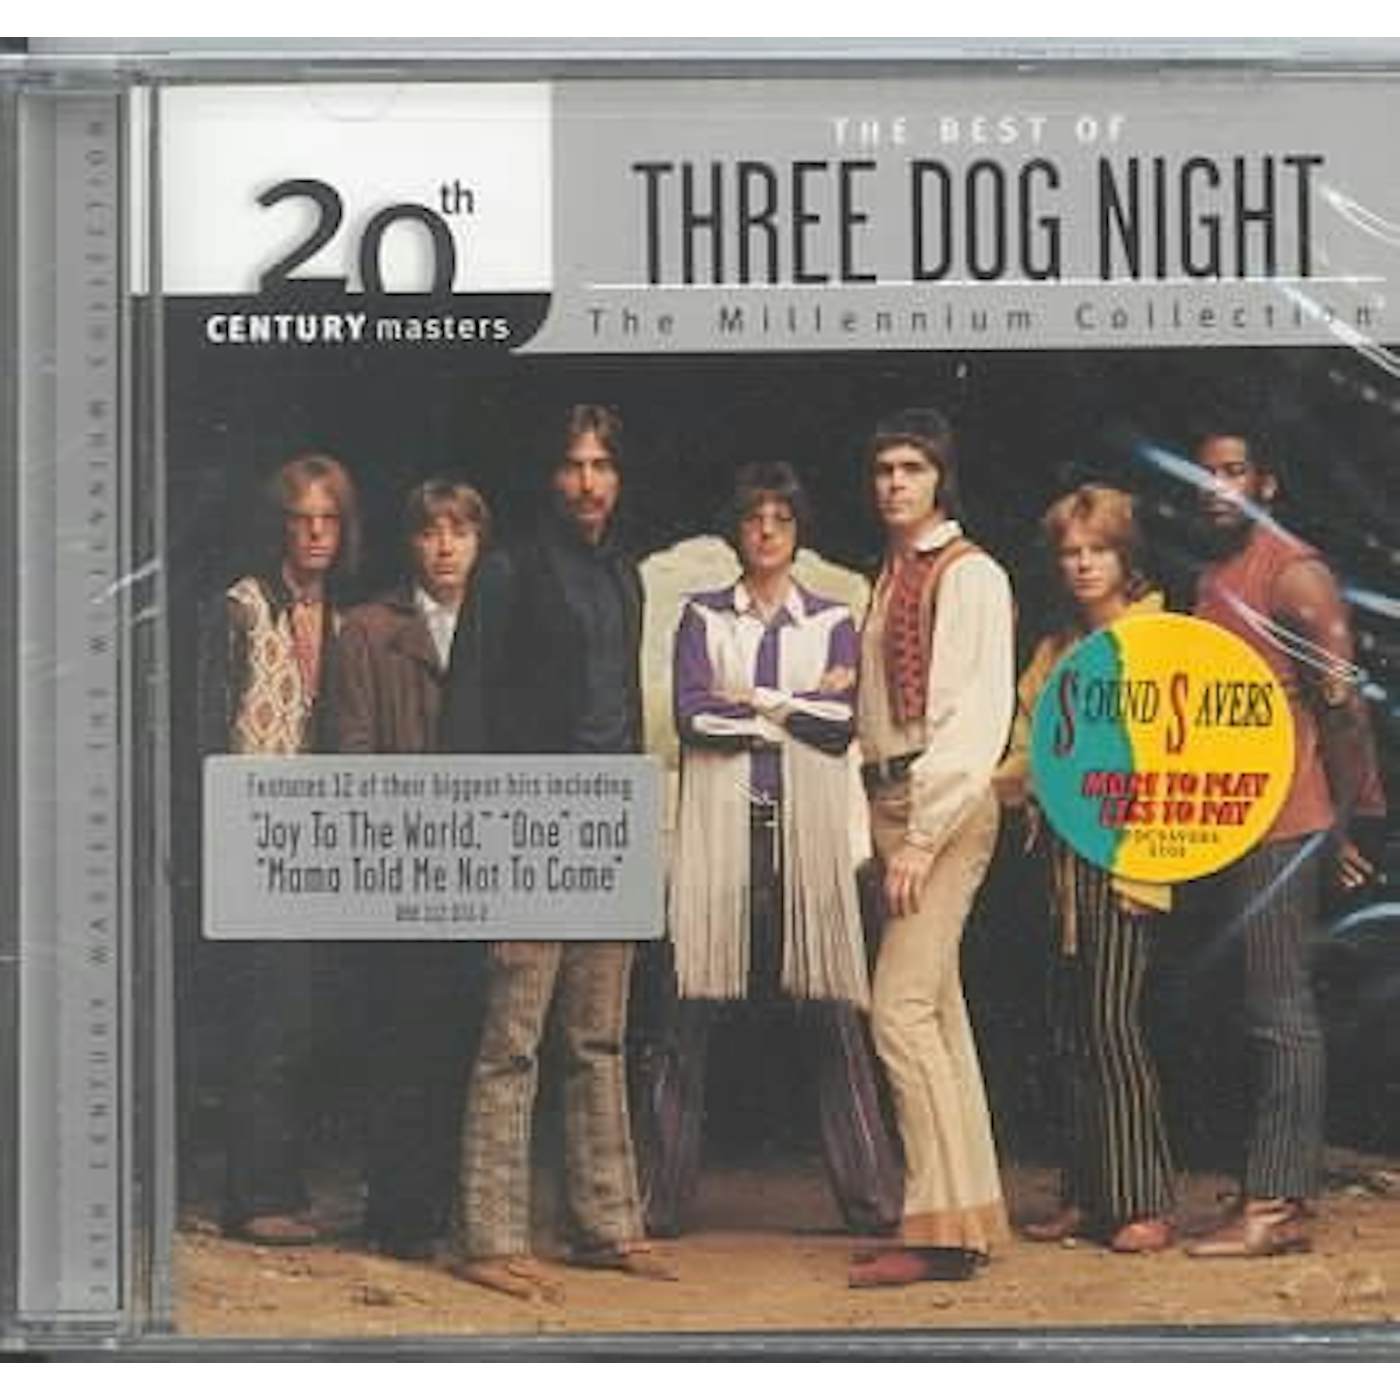 Three Dog Night Millennium Collection - 20th Century Masters CD